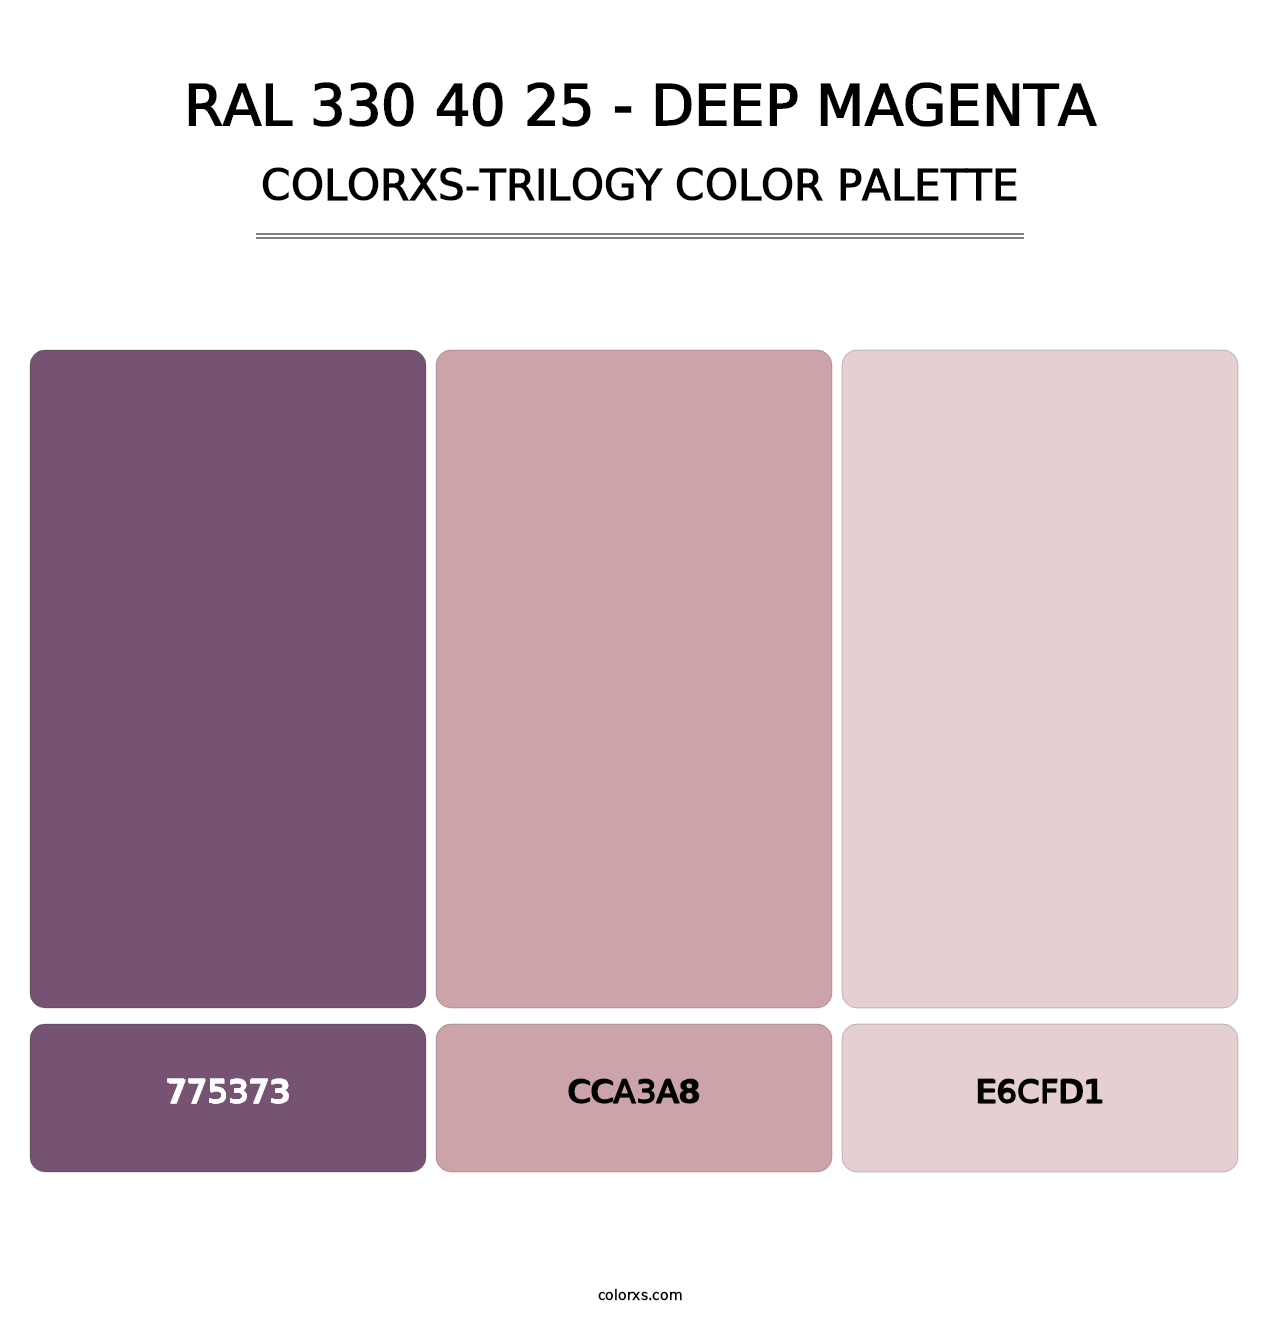 RAL 330 40 25 - Deep Magenta - Colorxs Trilogy Palette